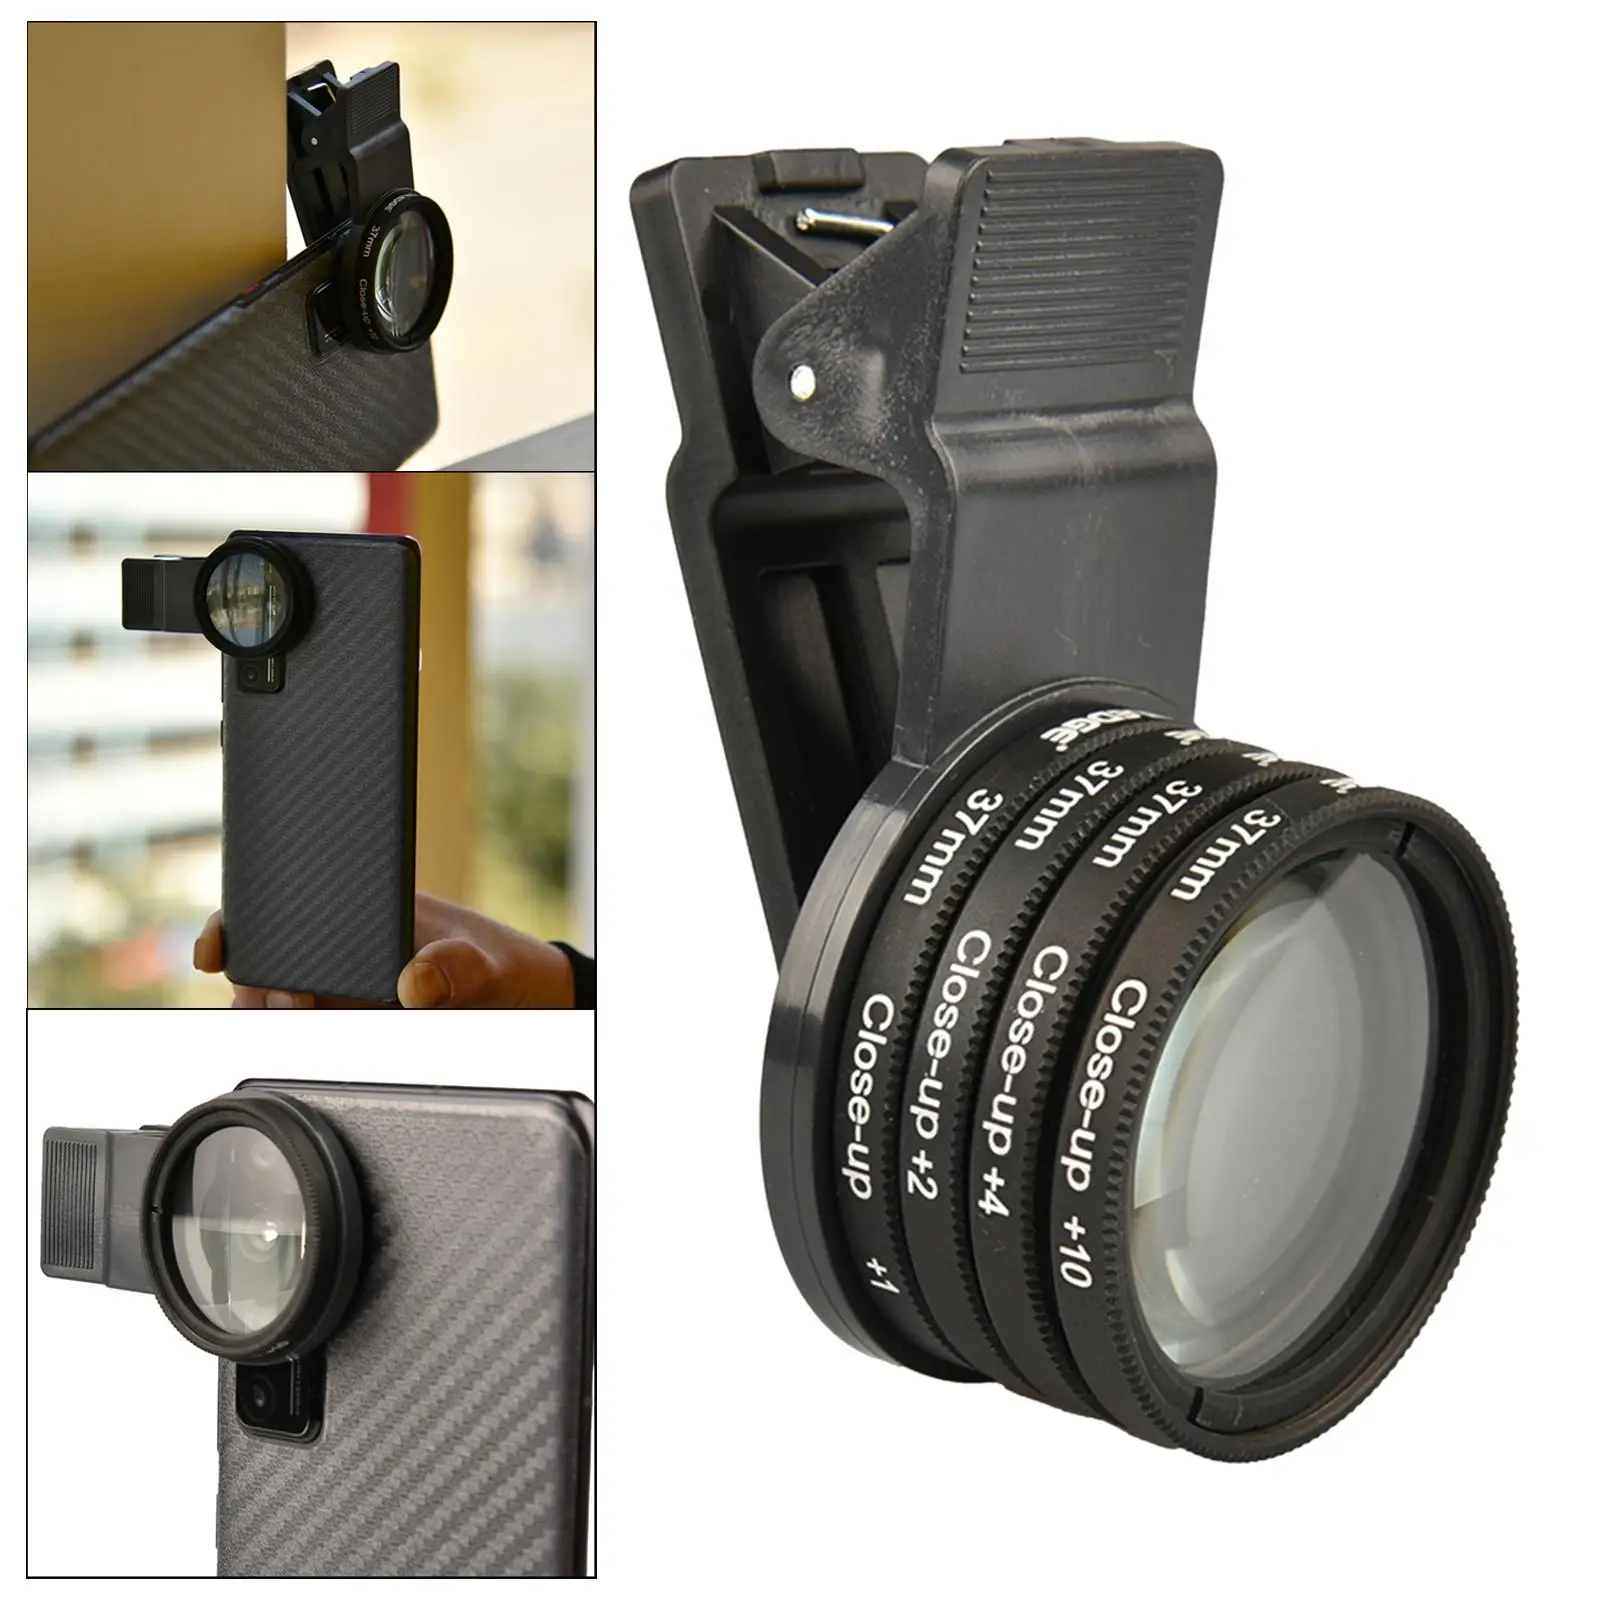 37mm Close up Filter Kit 4Pcs (+1,+2,+4,+10) Macro Lens Filter 37mm Filter Thread Wide Angle Lens Clip On Phone Camera Lens